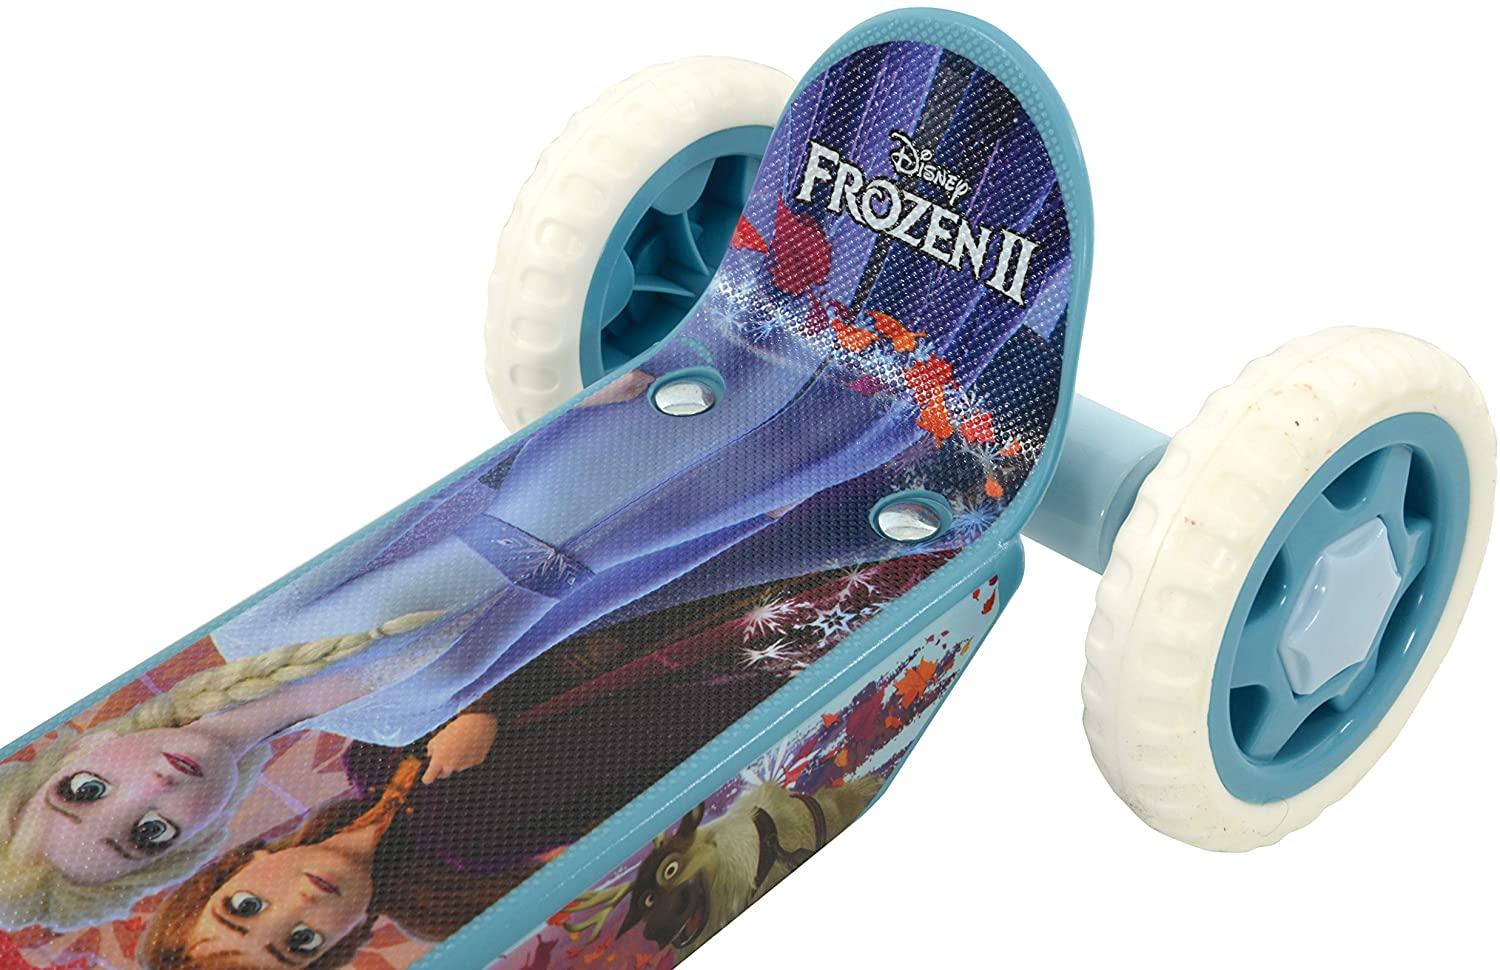 Frozen 2 Deluxe Tri Scooter Toymaster Ballina